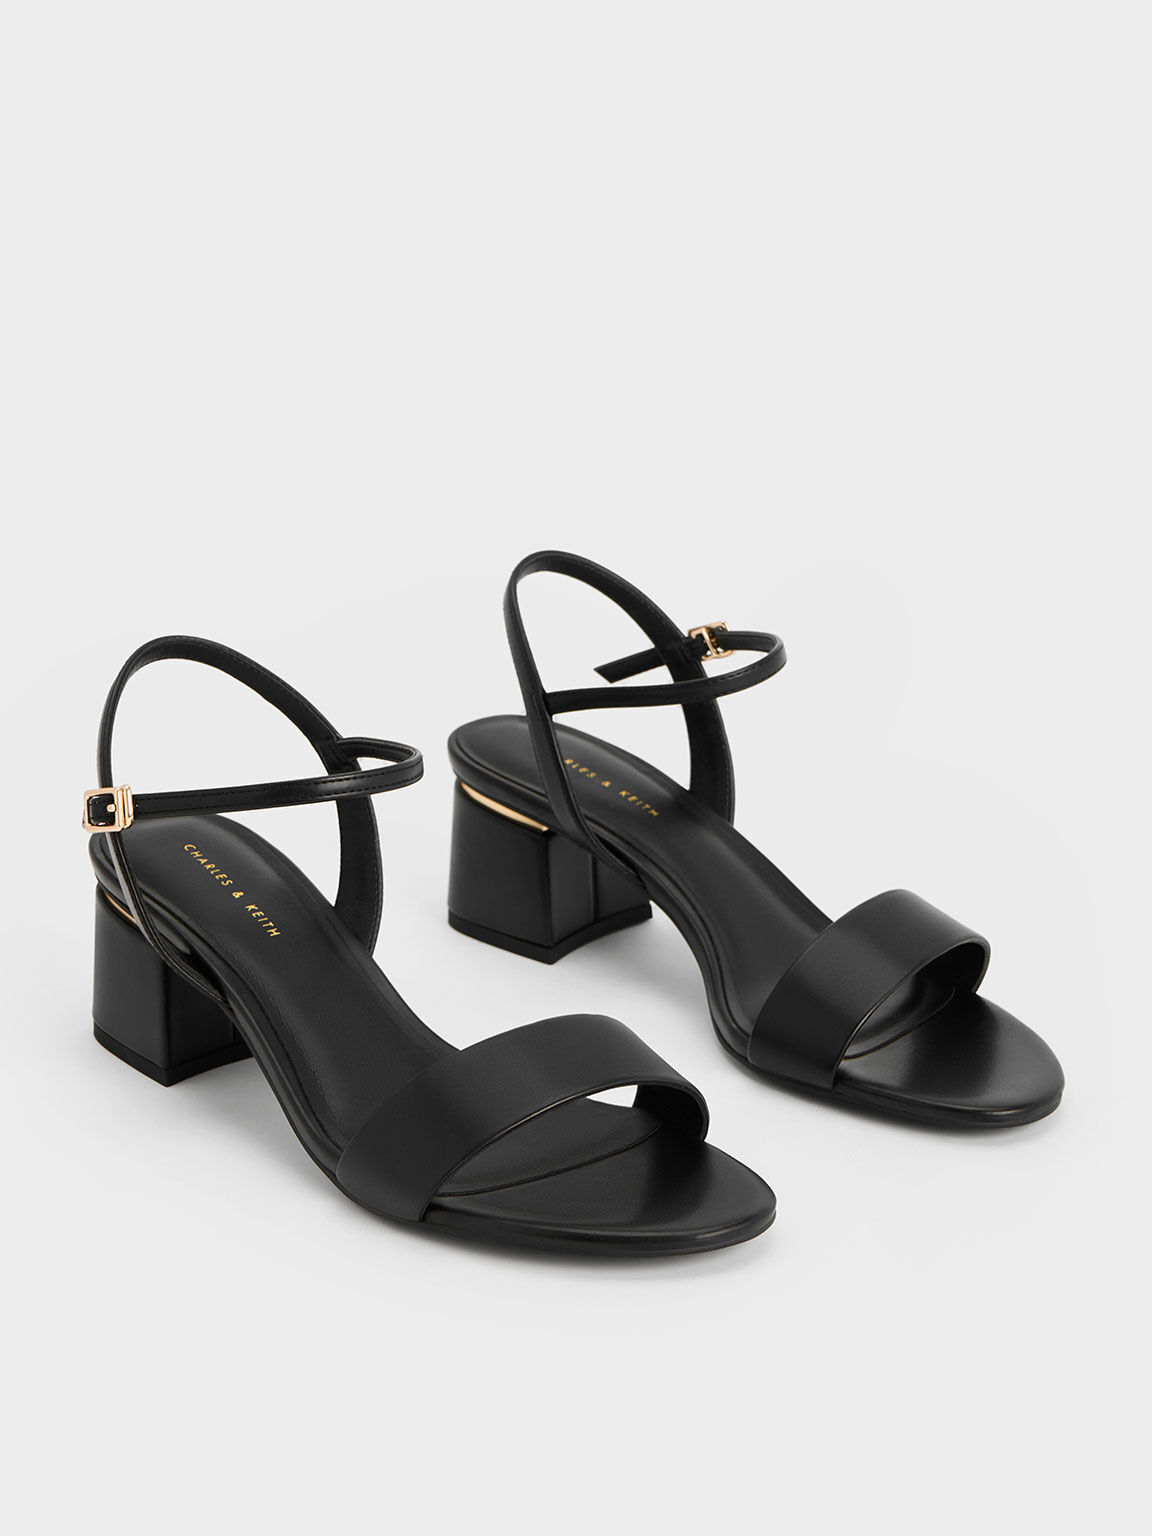 Sam Edelman Yaro Leather Ankle Strap Block Heel Dress Sandals | Dillard's